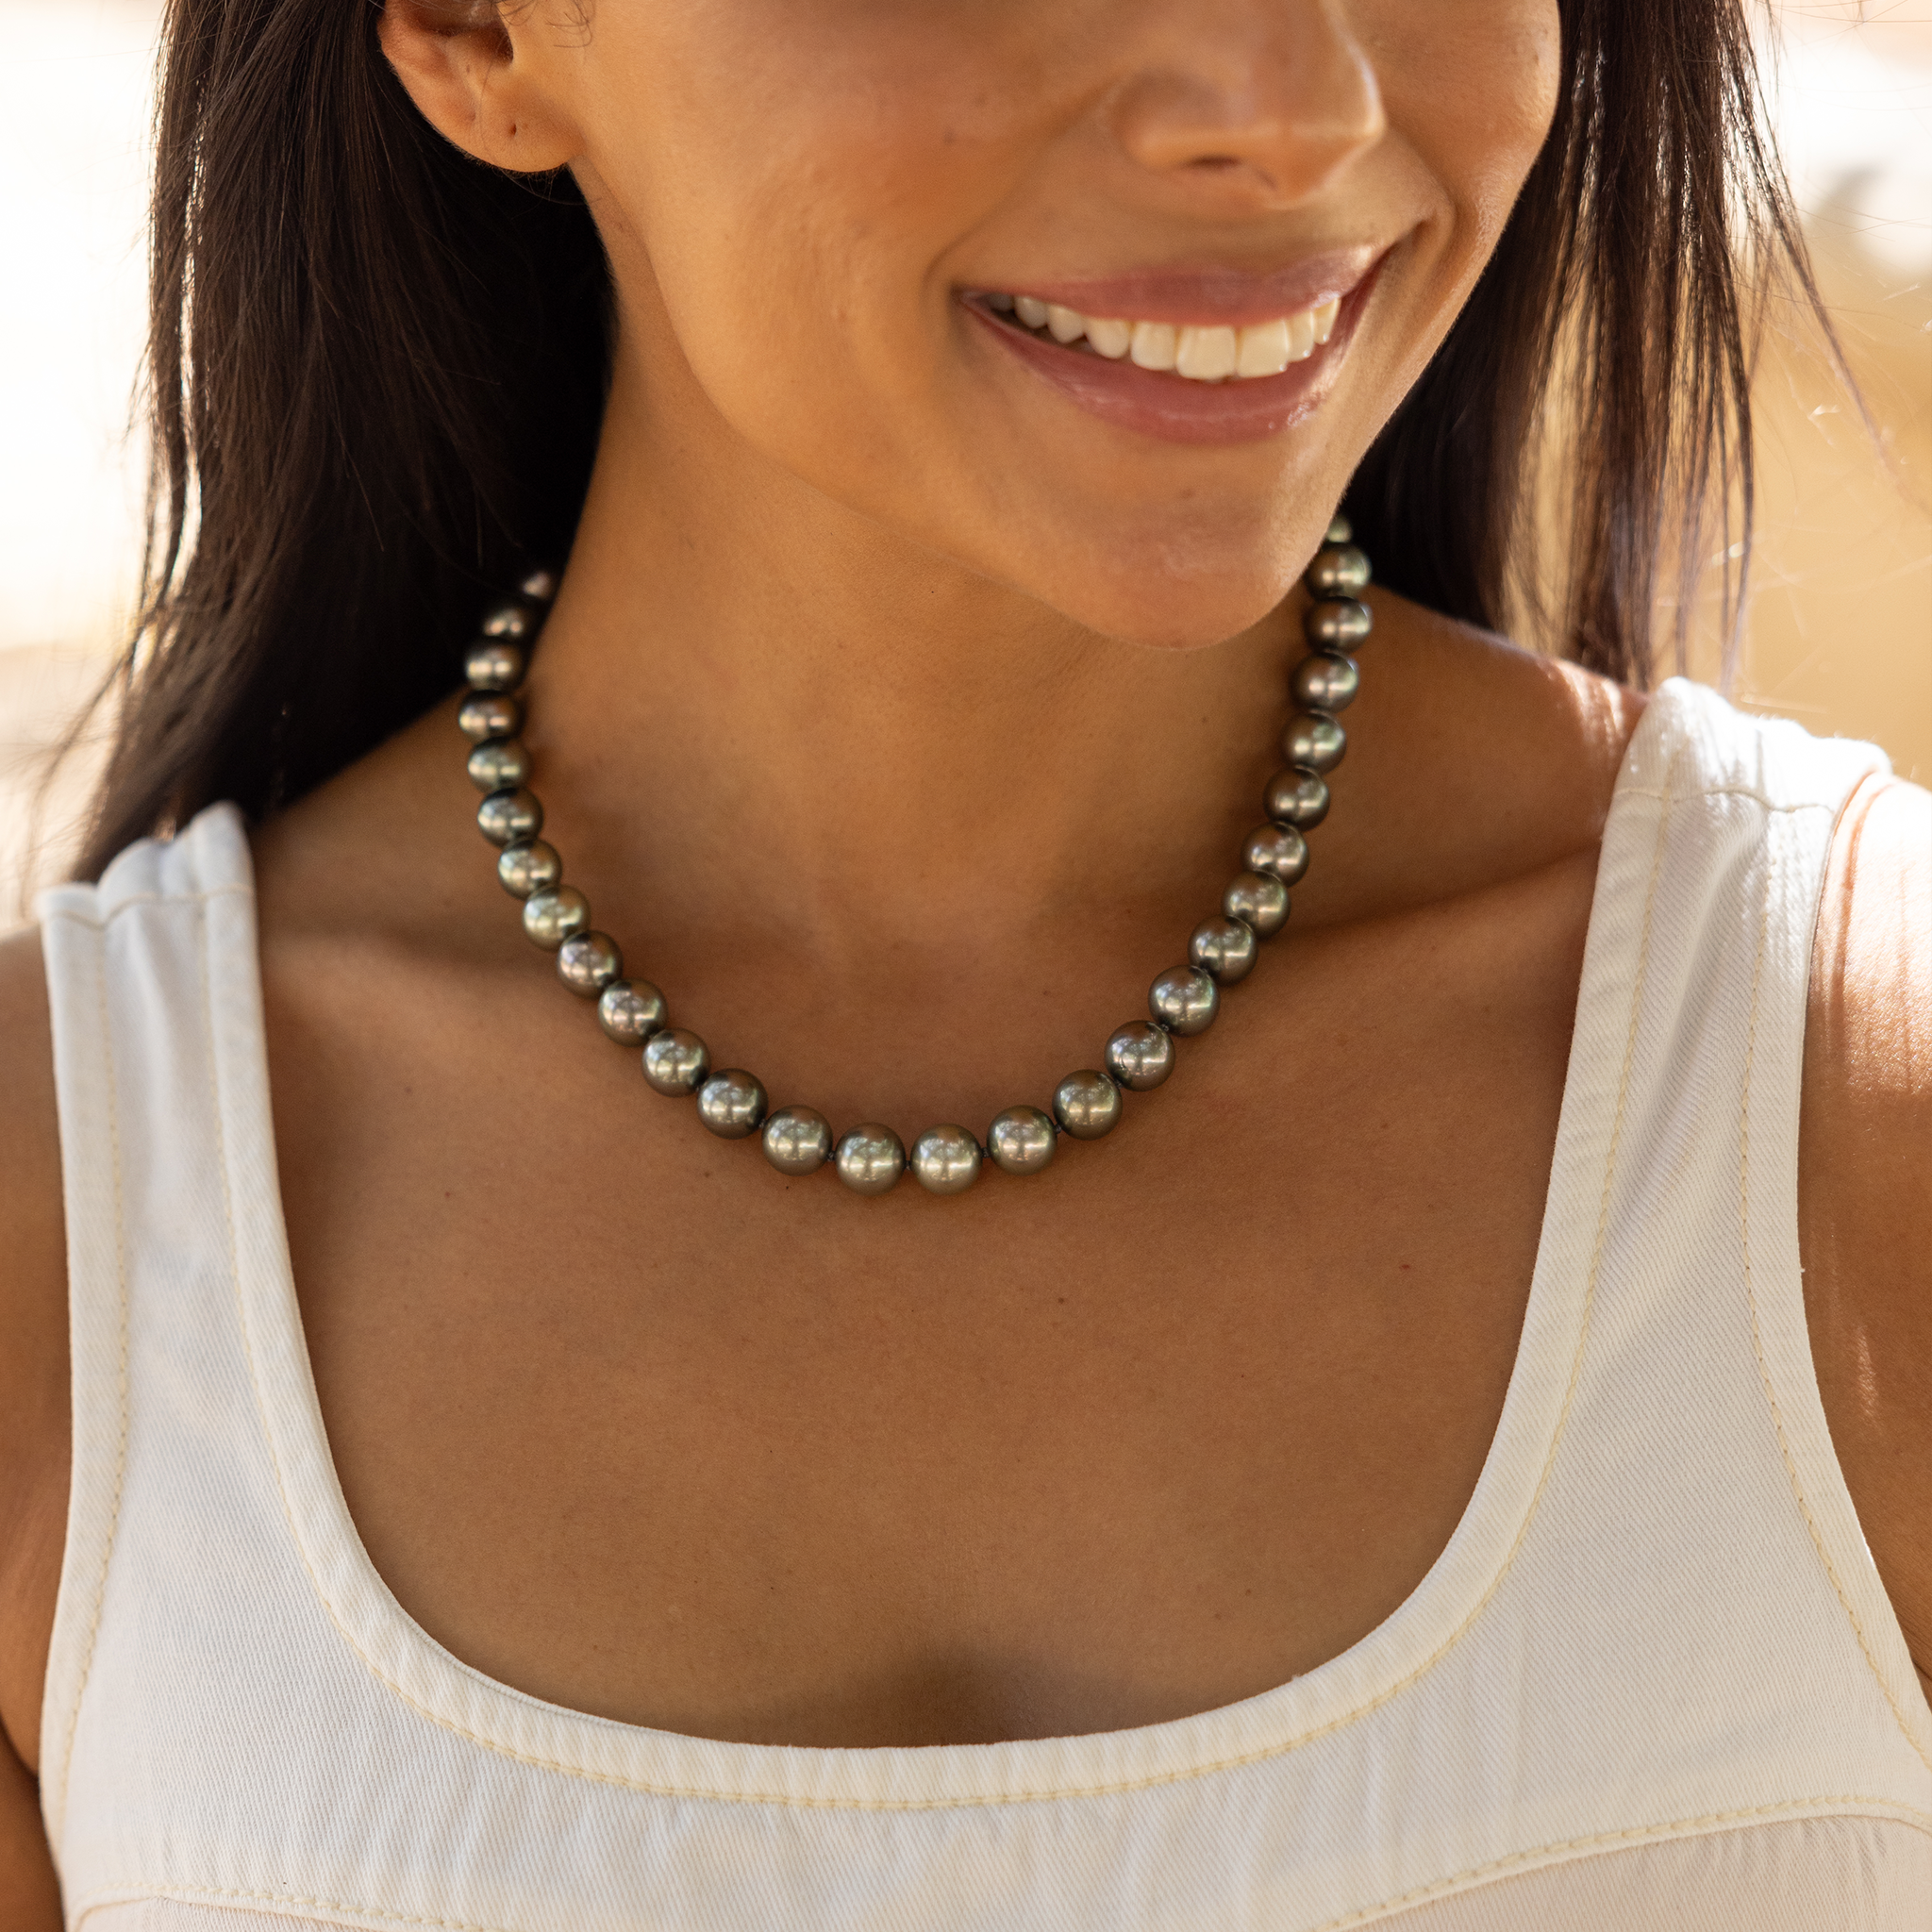 18-19 "brin de perle noir tahitien avec un fermoir de plumeria en diamant en or blanc - 10-11 mm